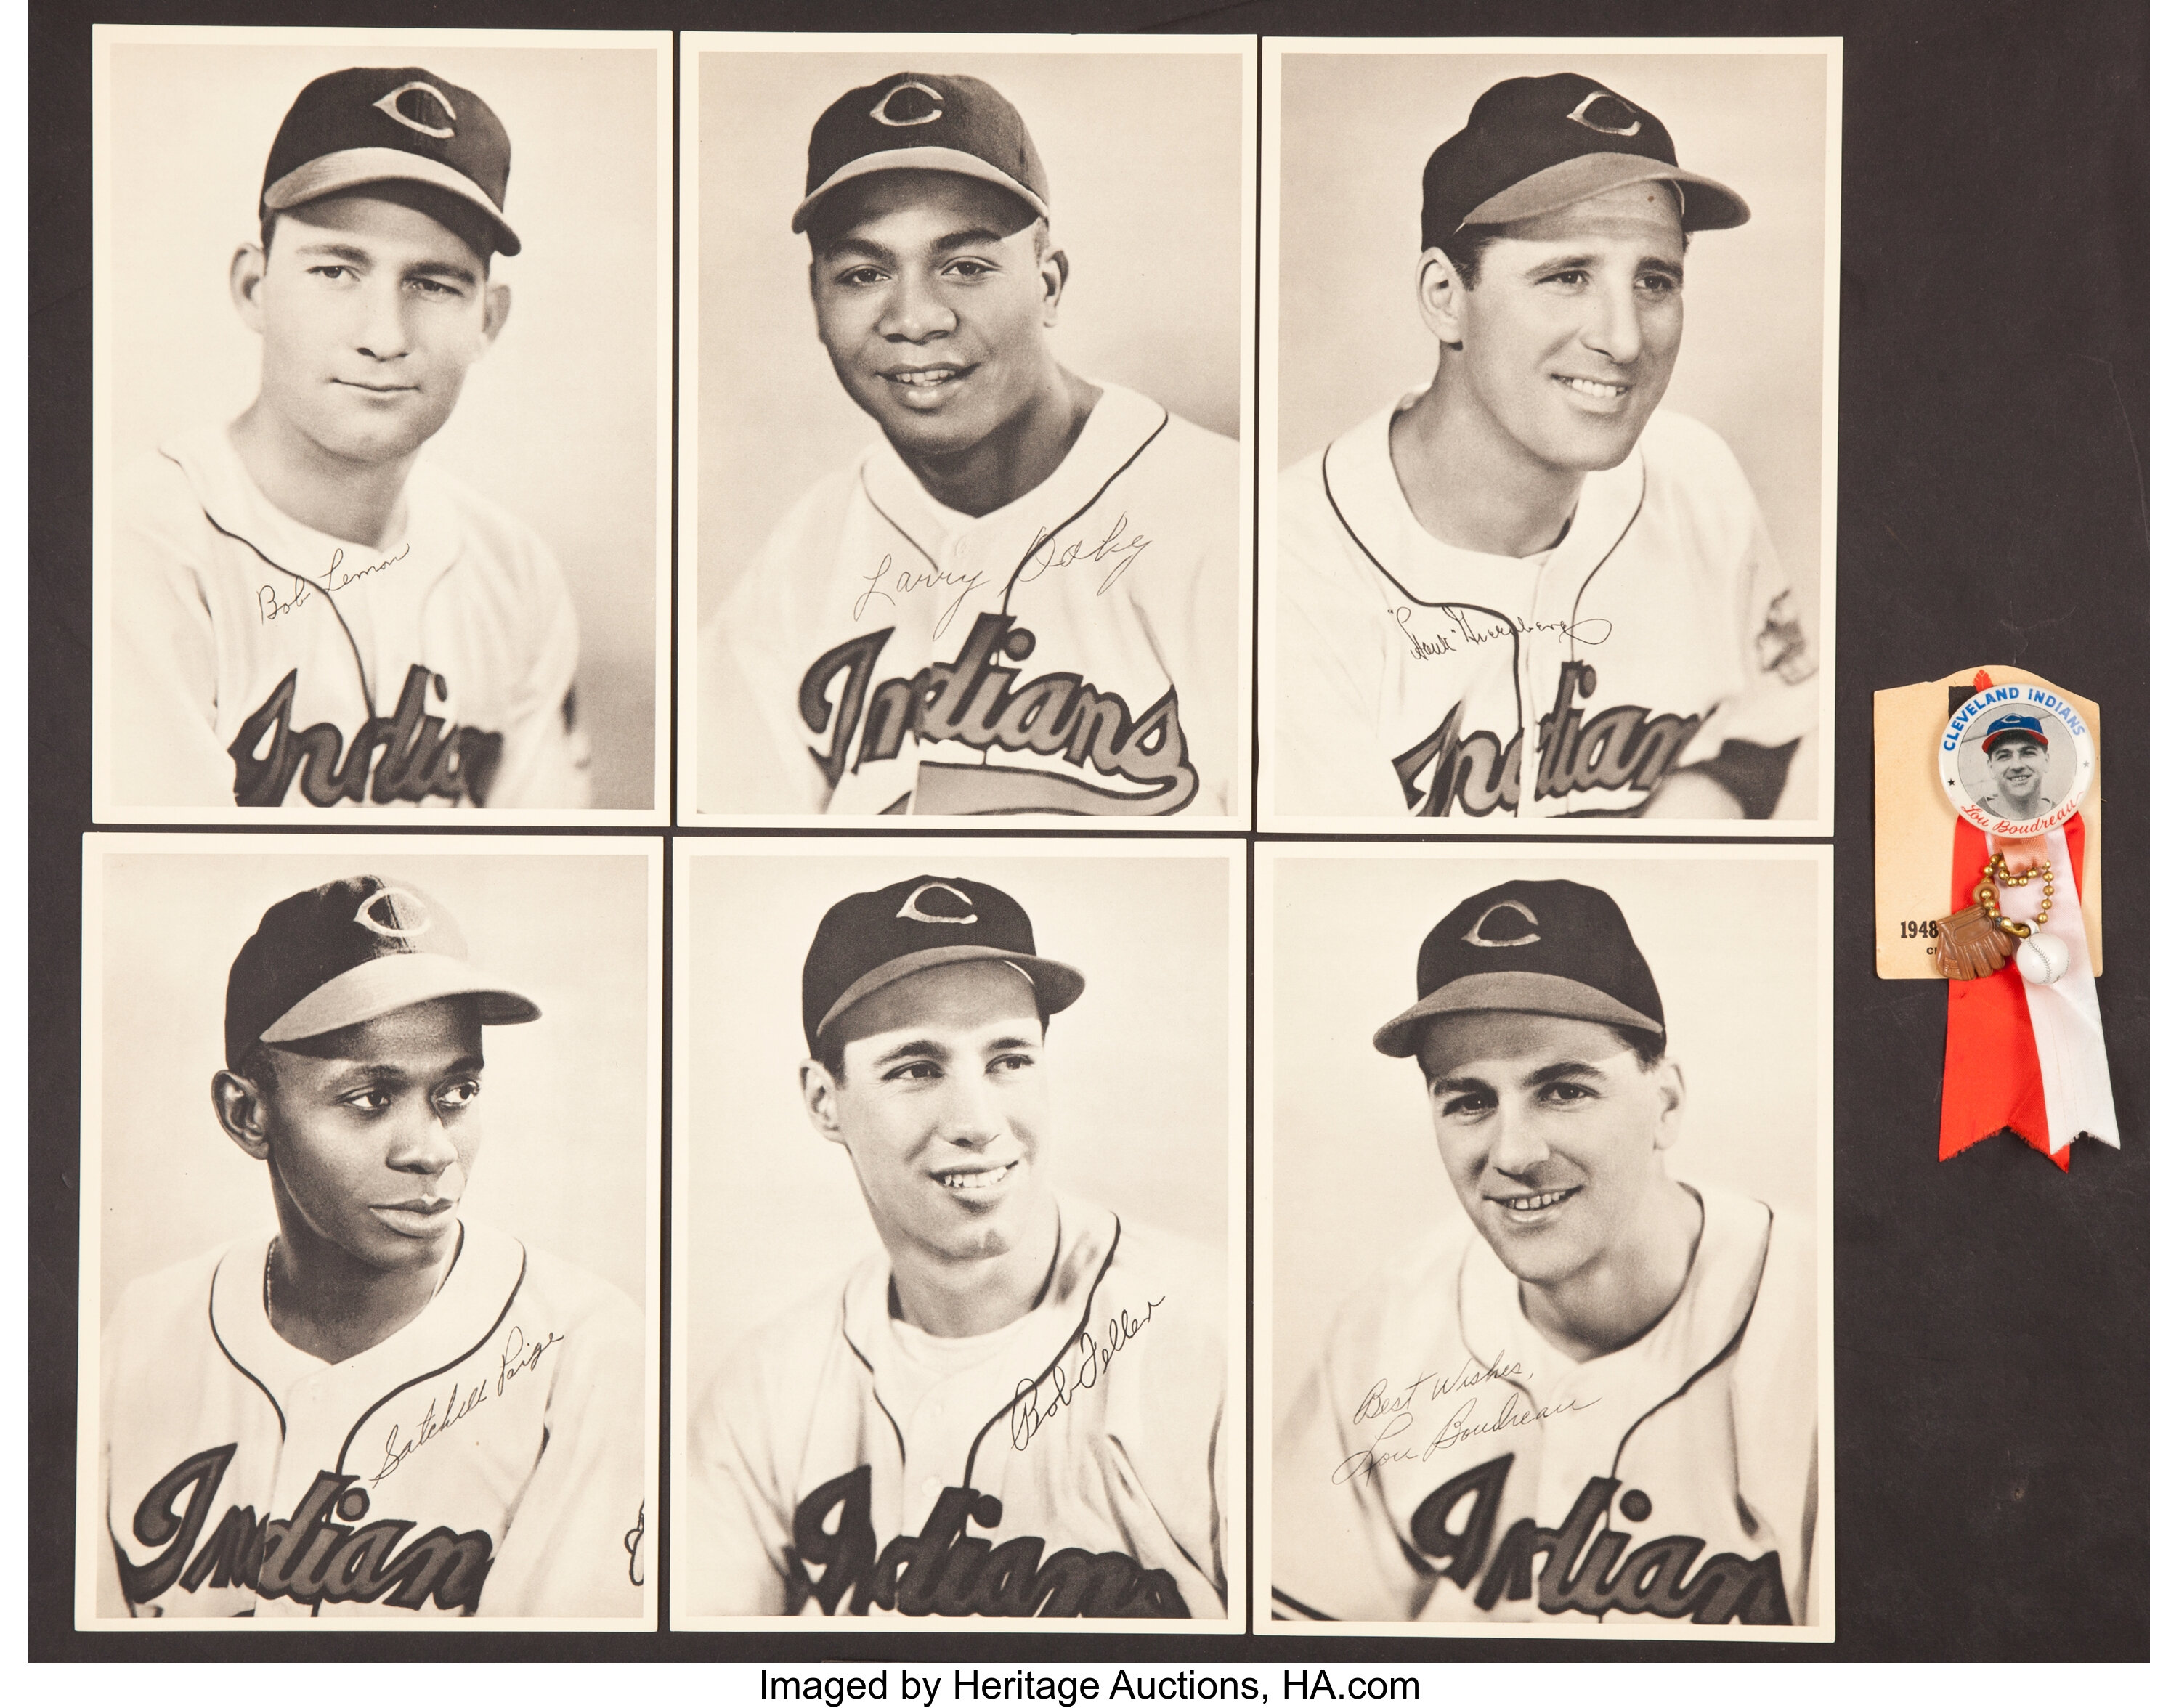 1948 Cleveland Indians Photo 8X10 - Feller World Champs